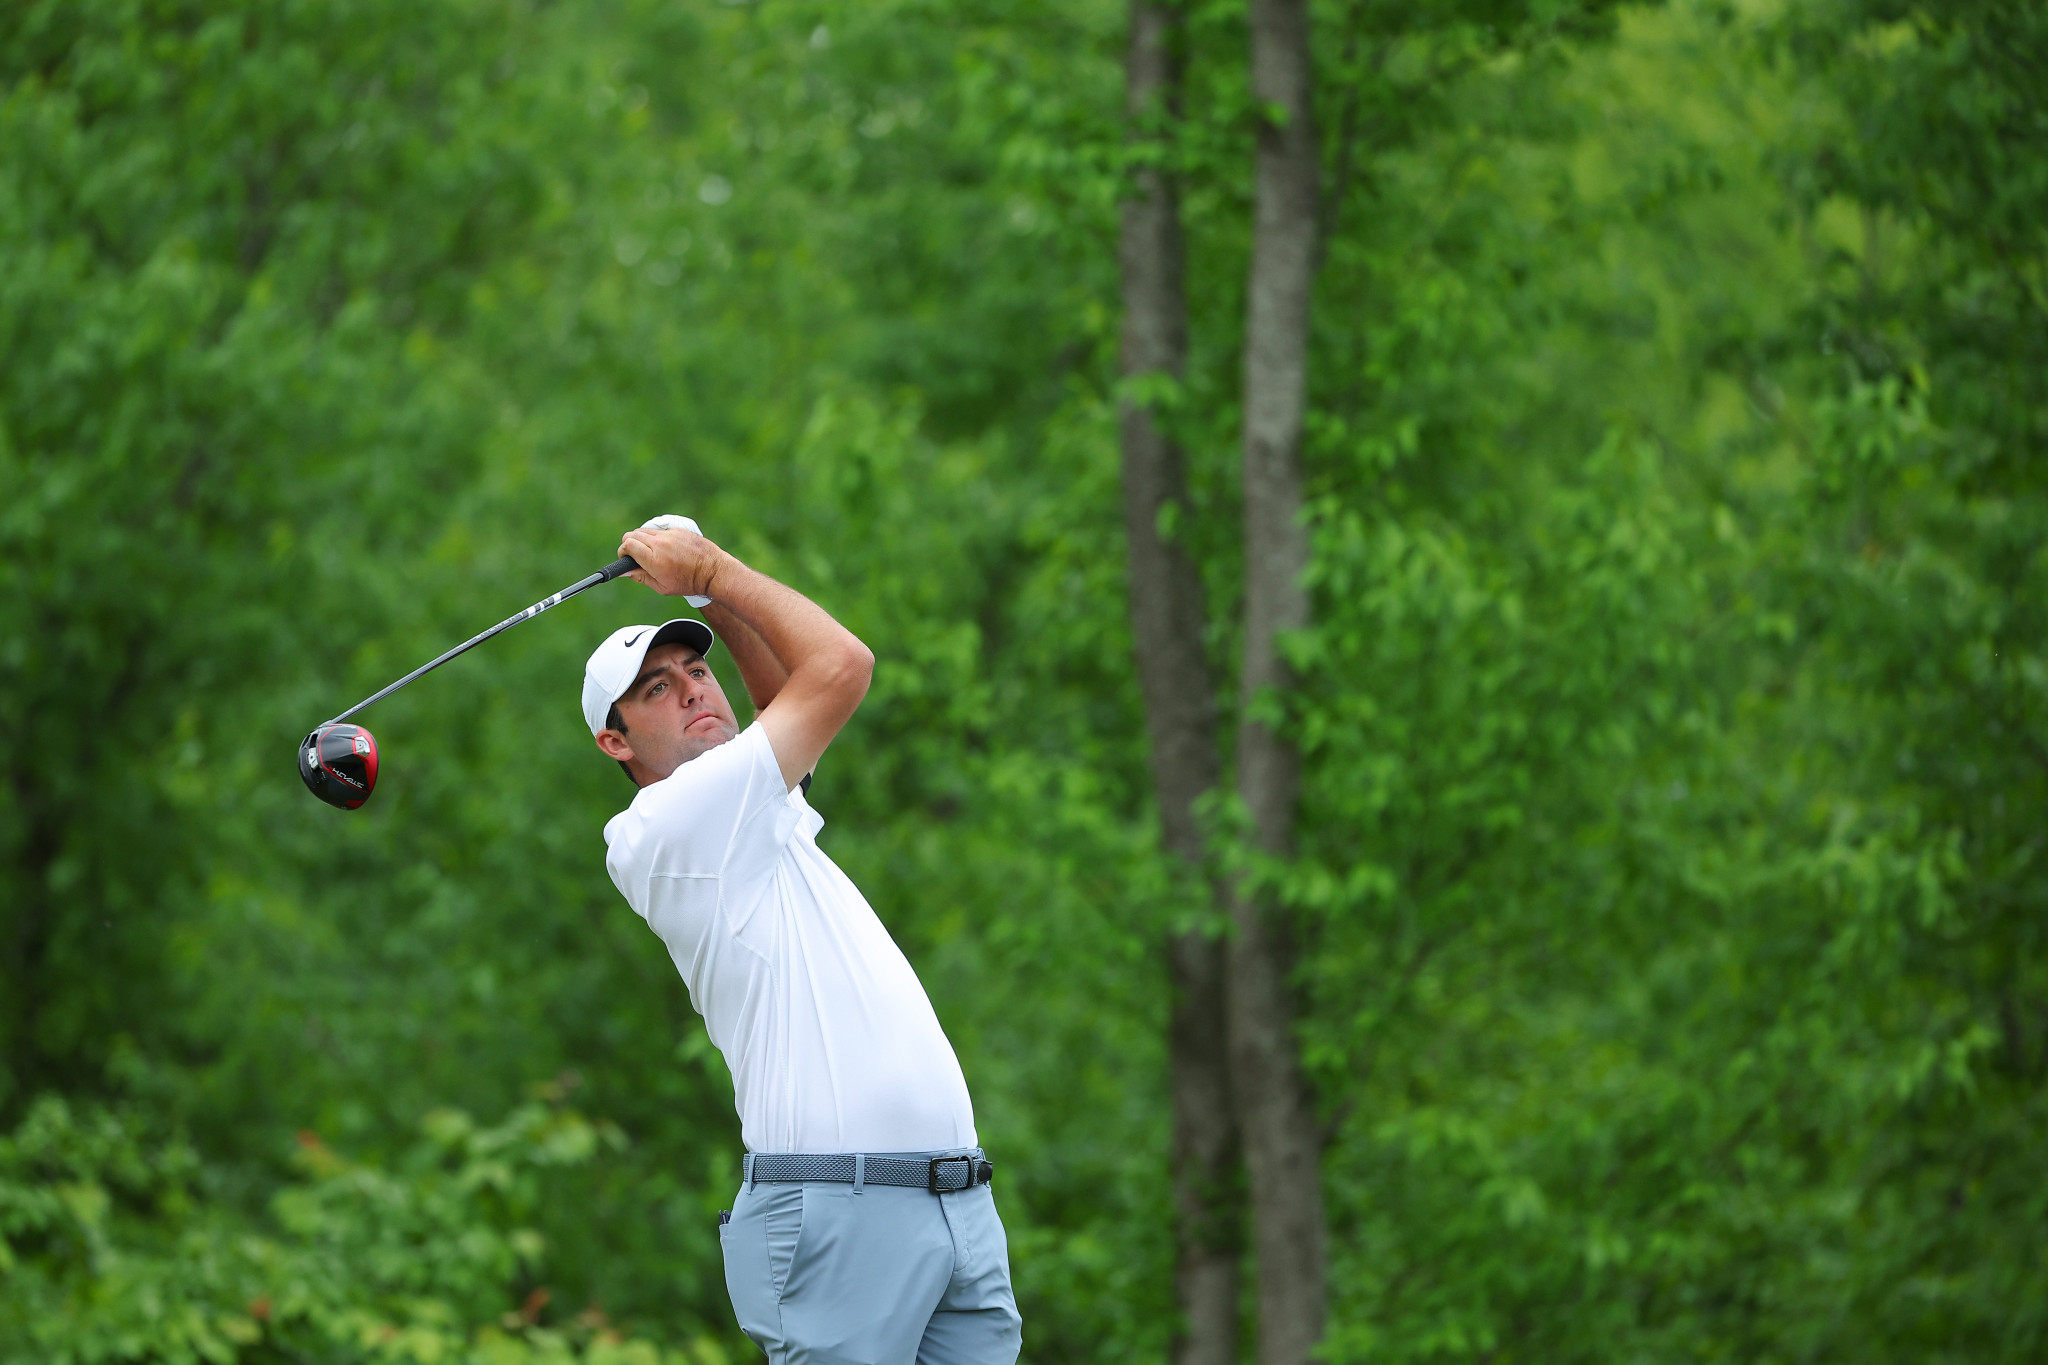 Three-way lead at halfway stage of PGA Championship